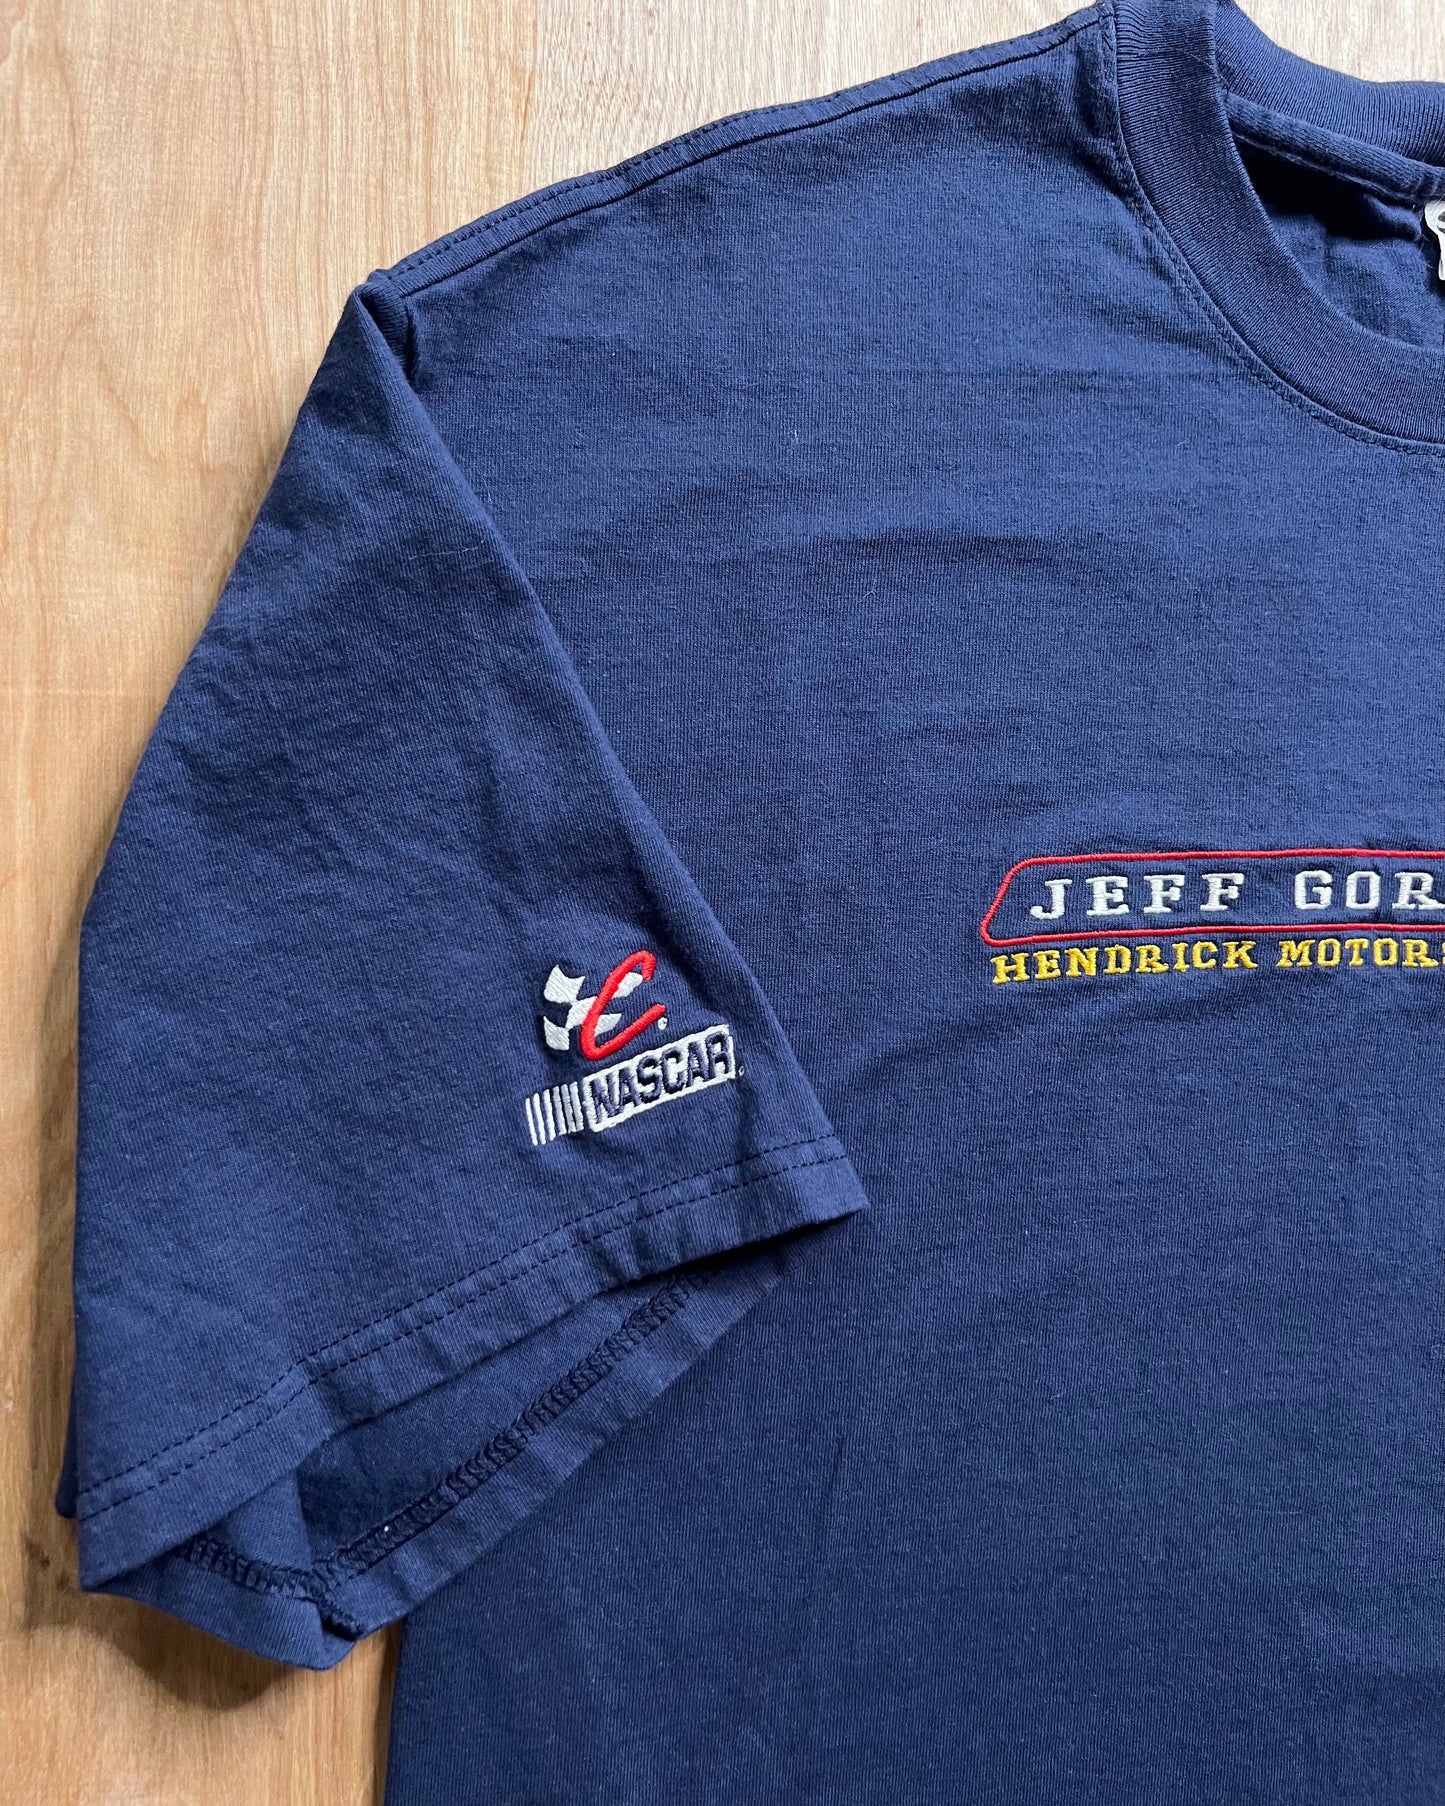 Vintage Jeff Gordon Nascar Racing T-Shirt